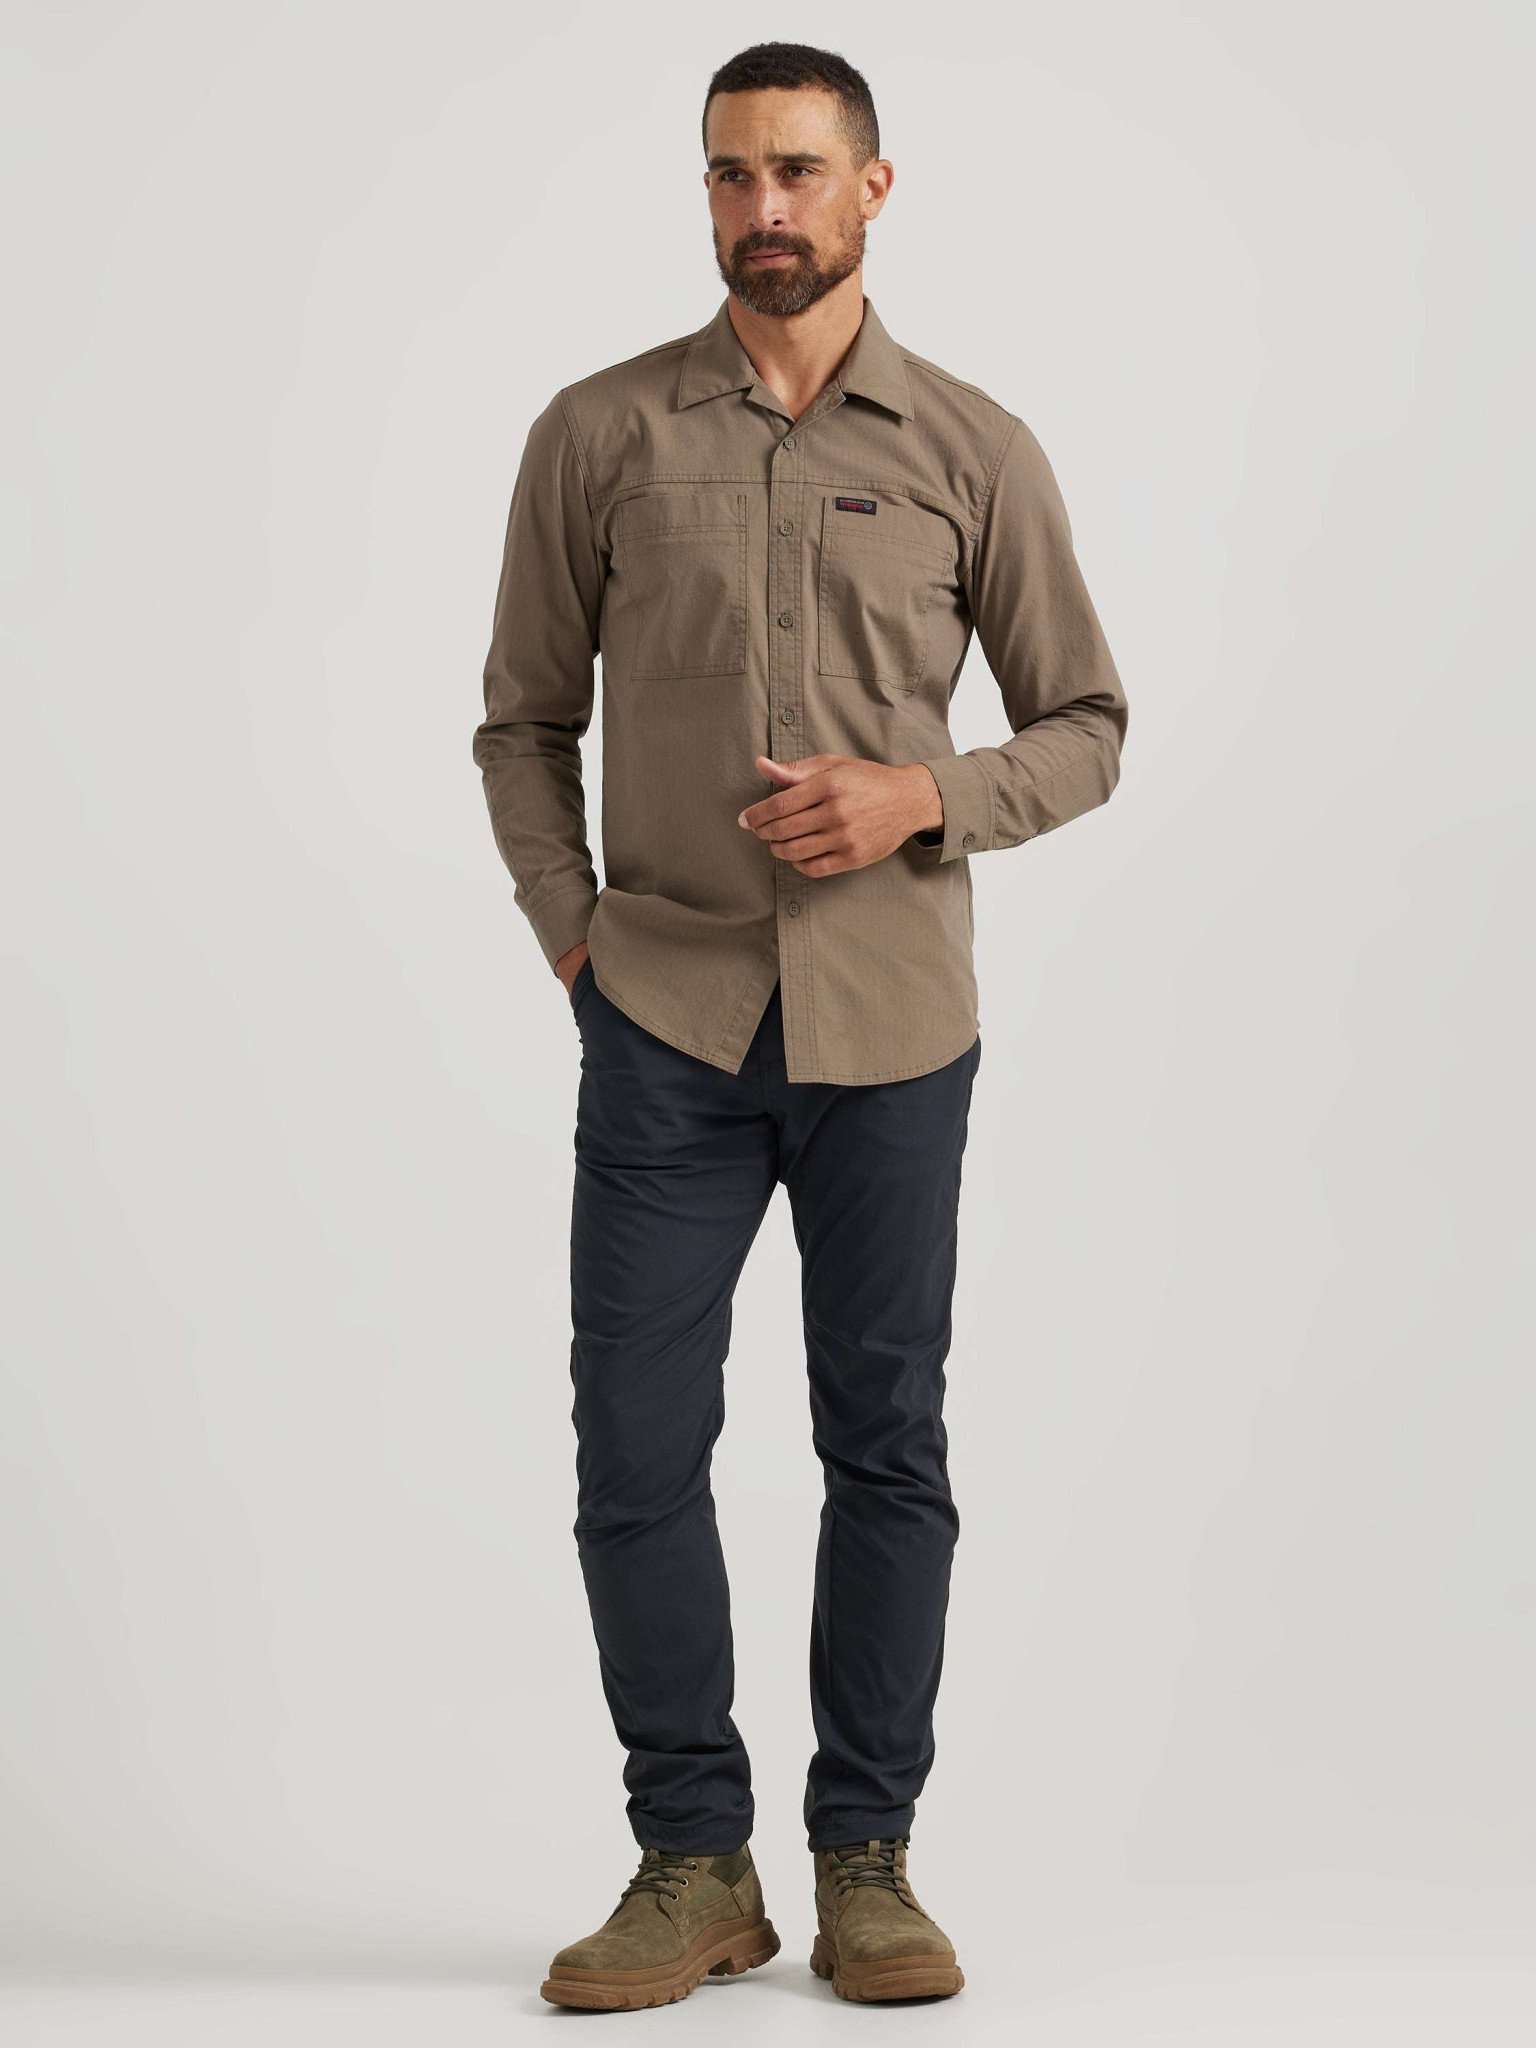 LS Rugged Utility Shirt in Bungee Cord Hemden Wrangler   